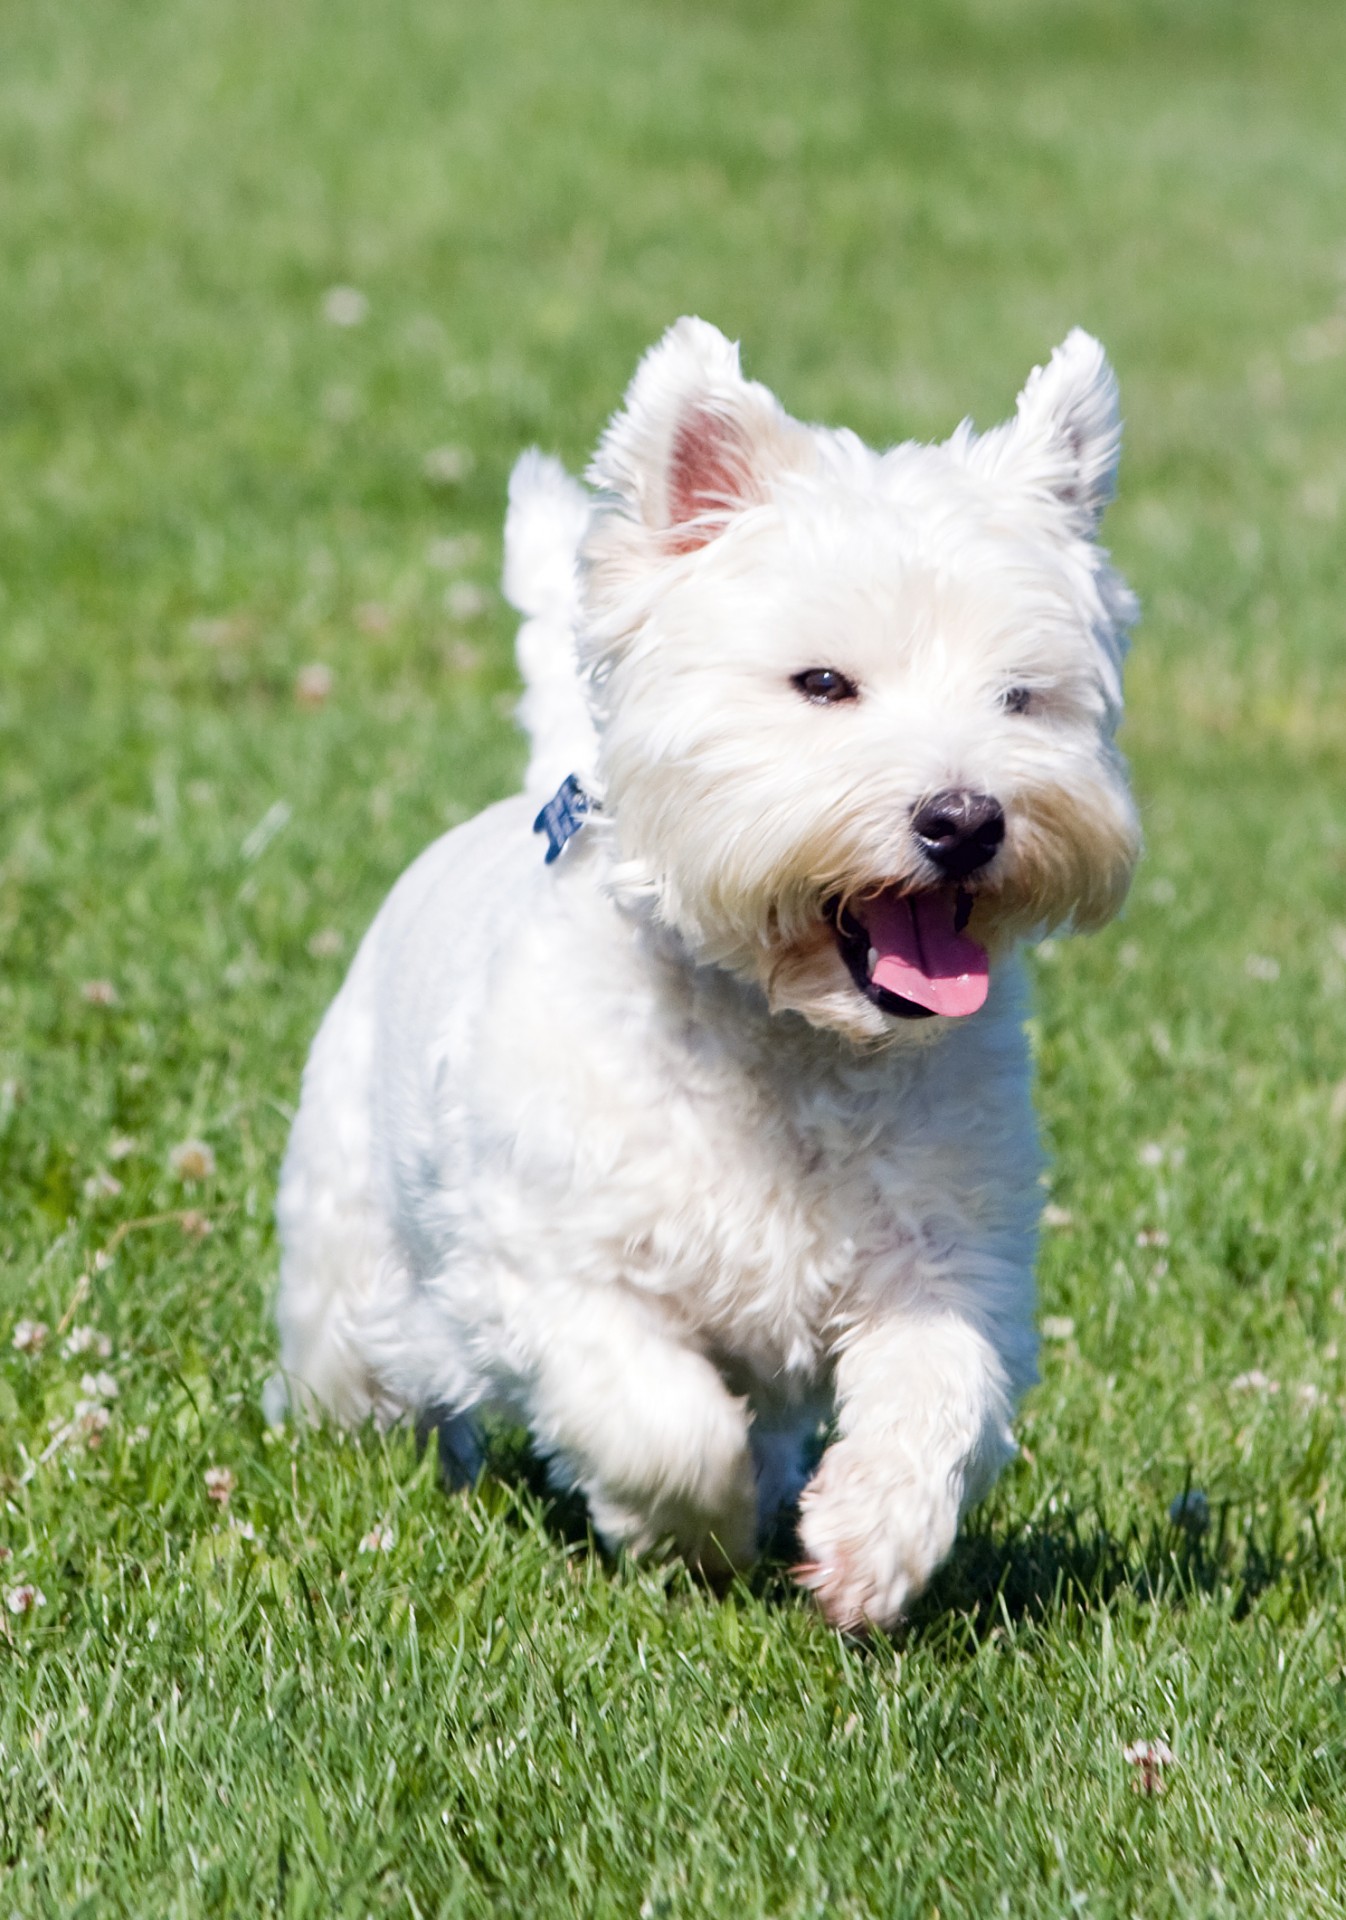 Cute westie, west highland white terrier dog running in close-up